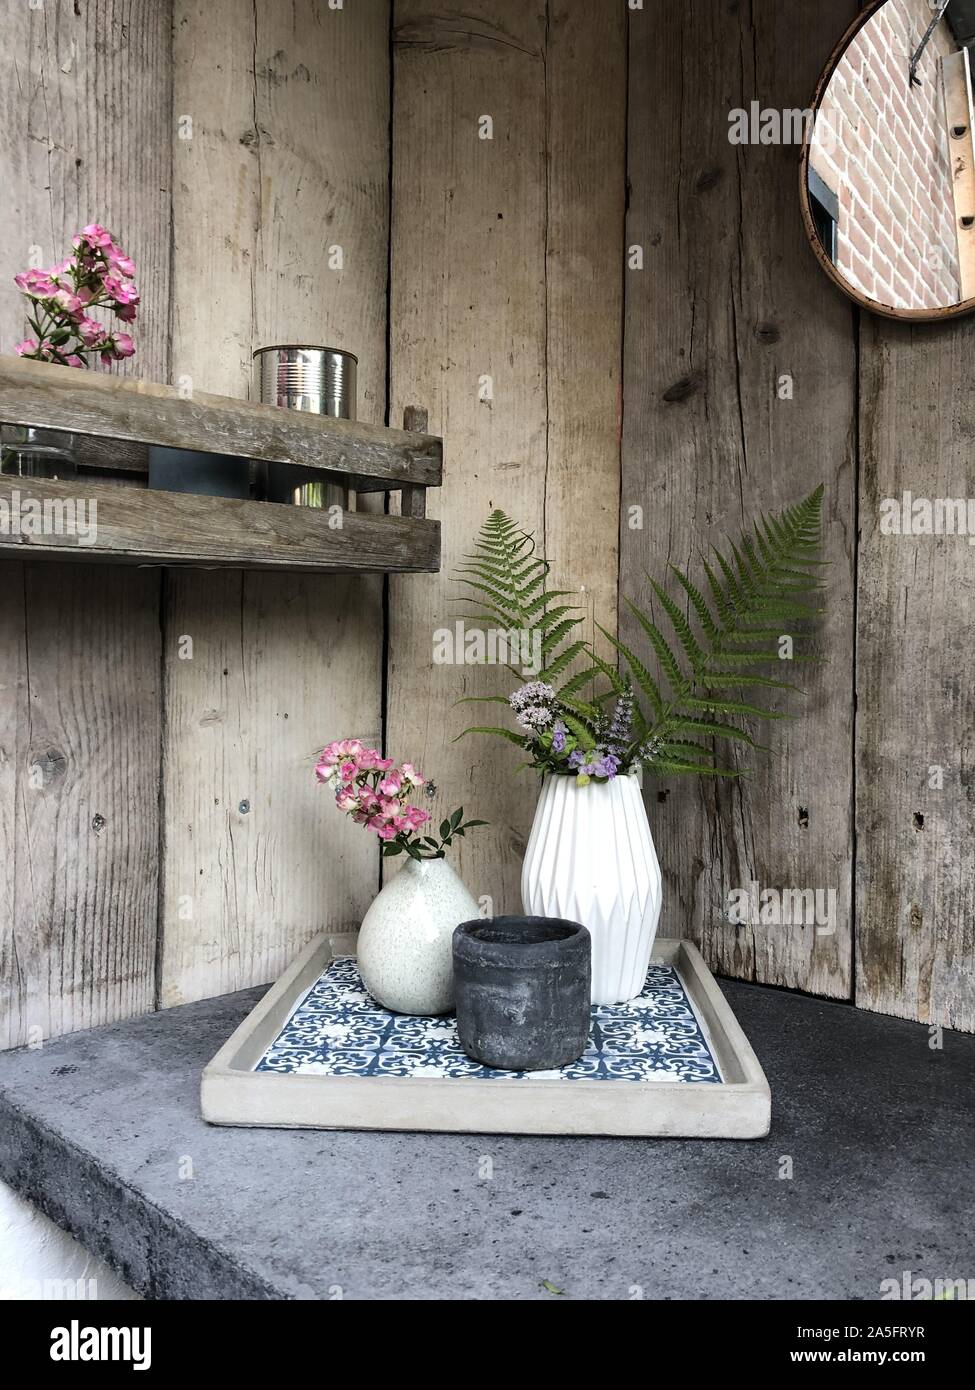 Flower arrangements in an outdoor kitchen Stock Photo